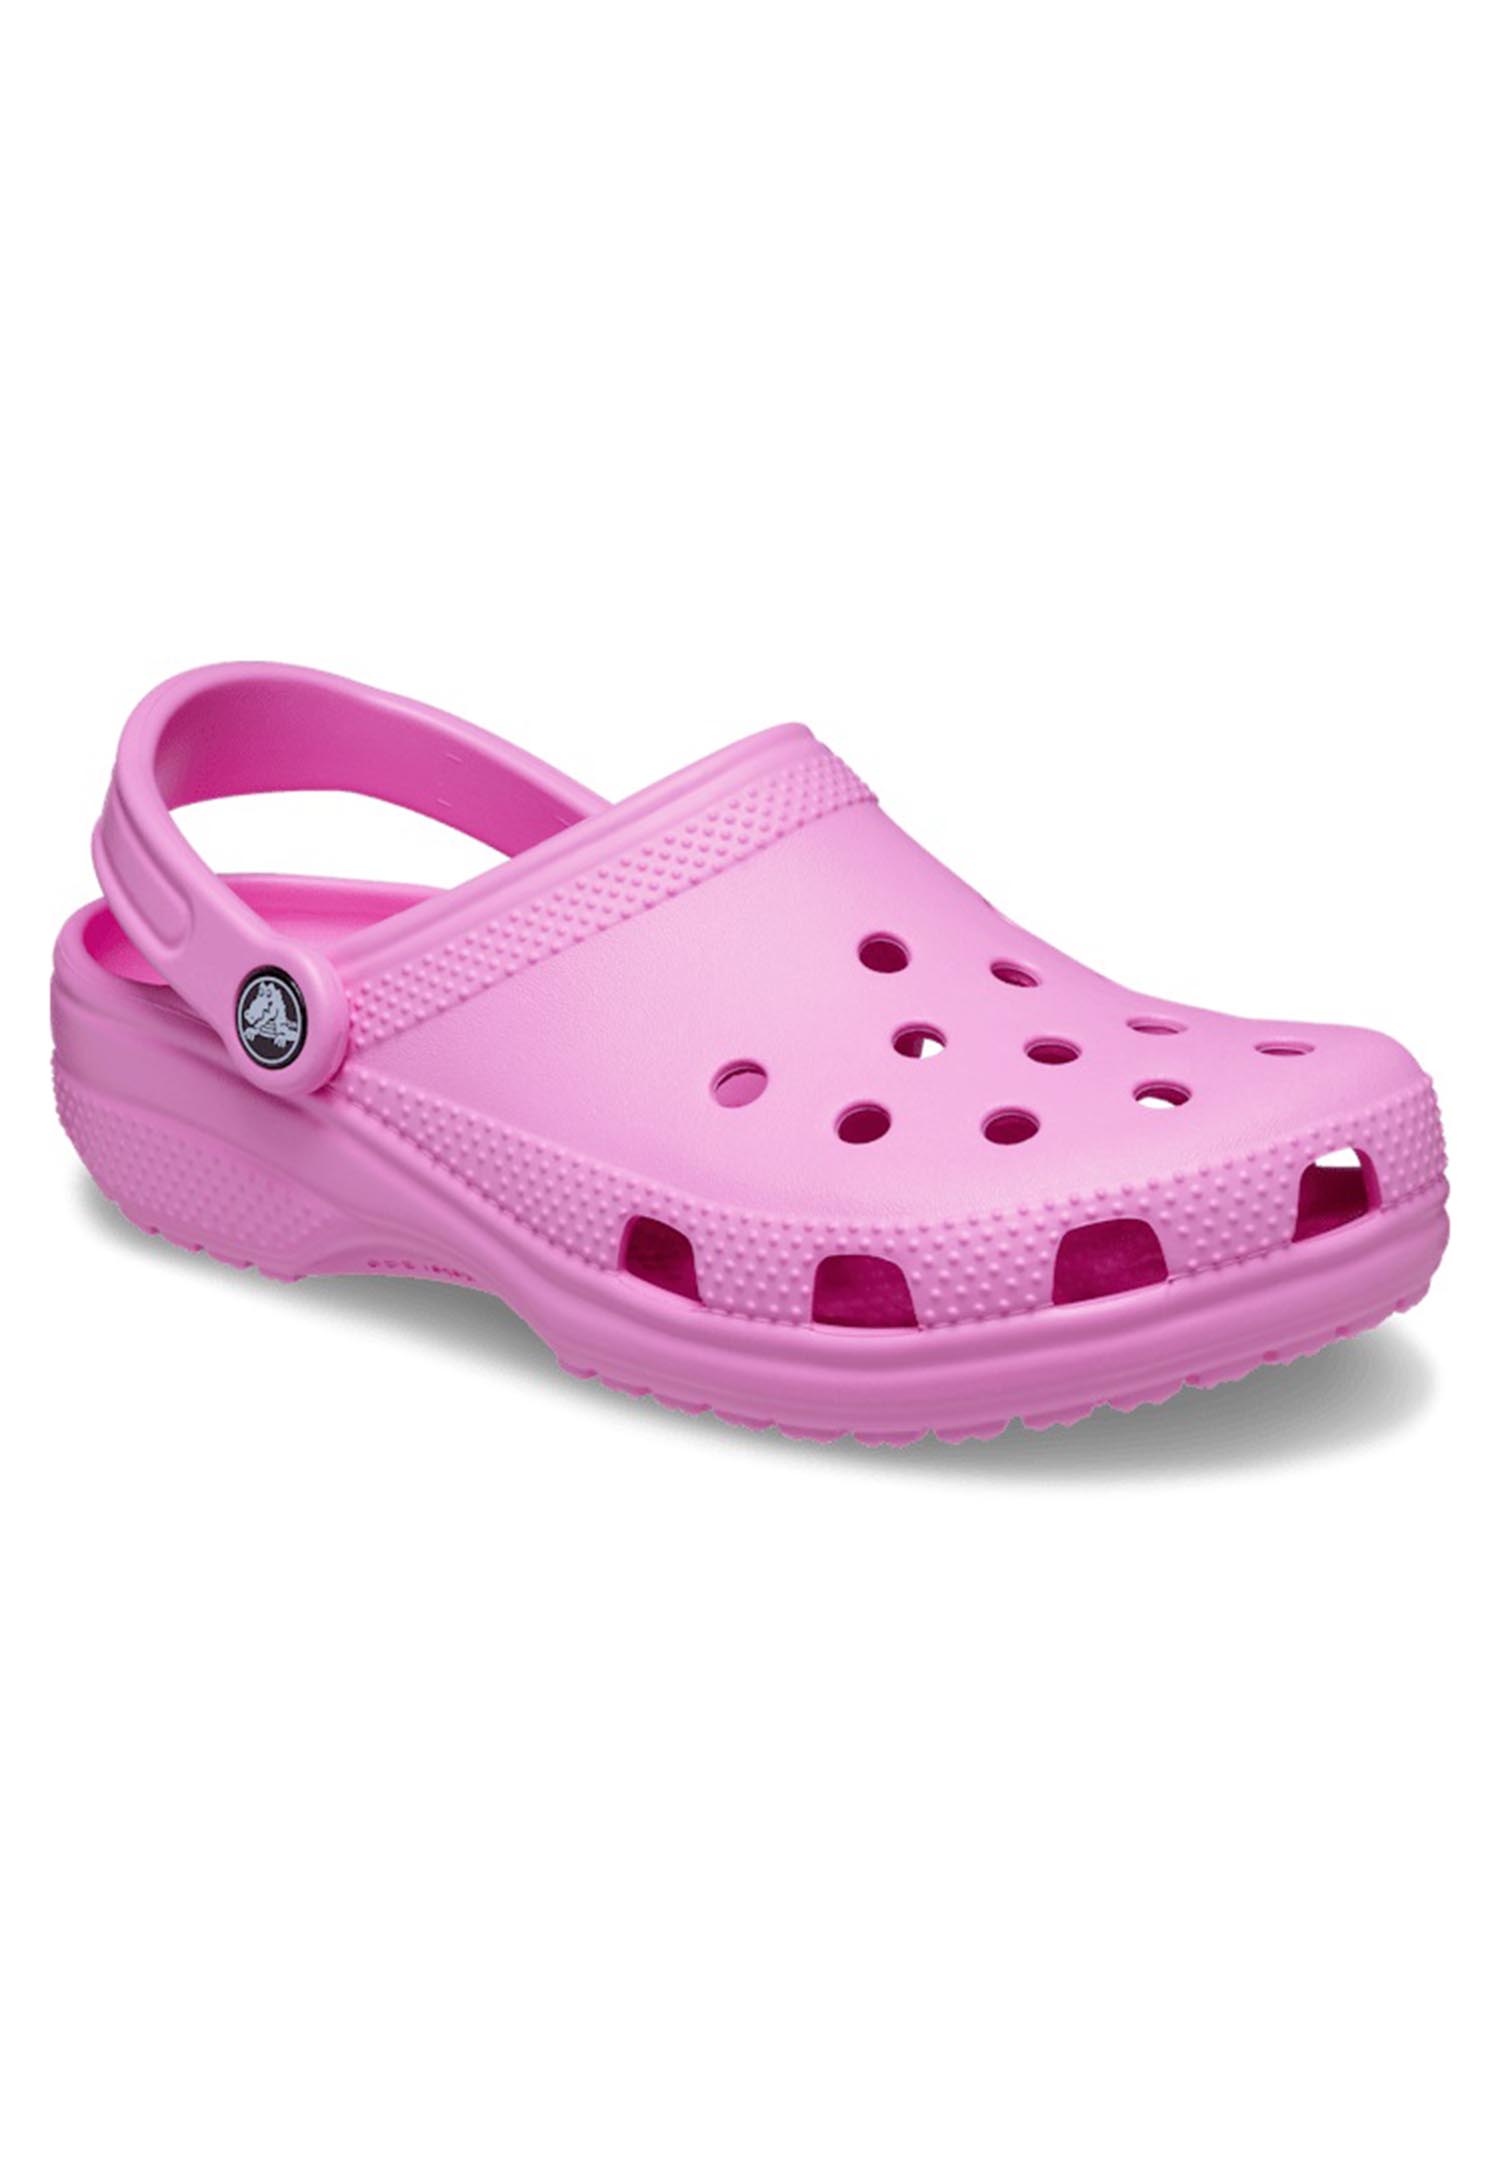 Crocs Classic Clog Unisex Erwachsene 10001 6SW pink